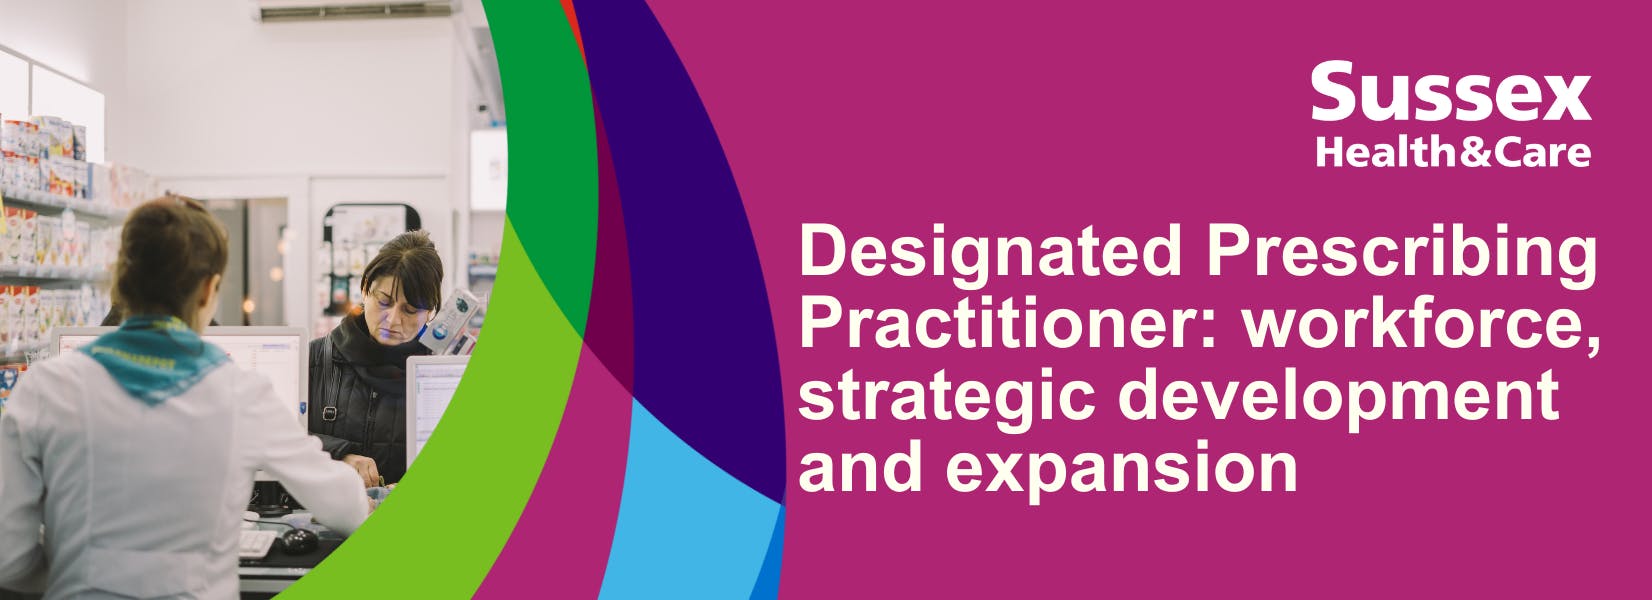 Designated Prescribing Practitioner workforce strategic development and expansion